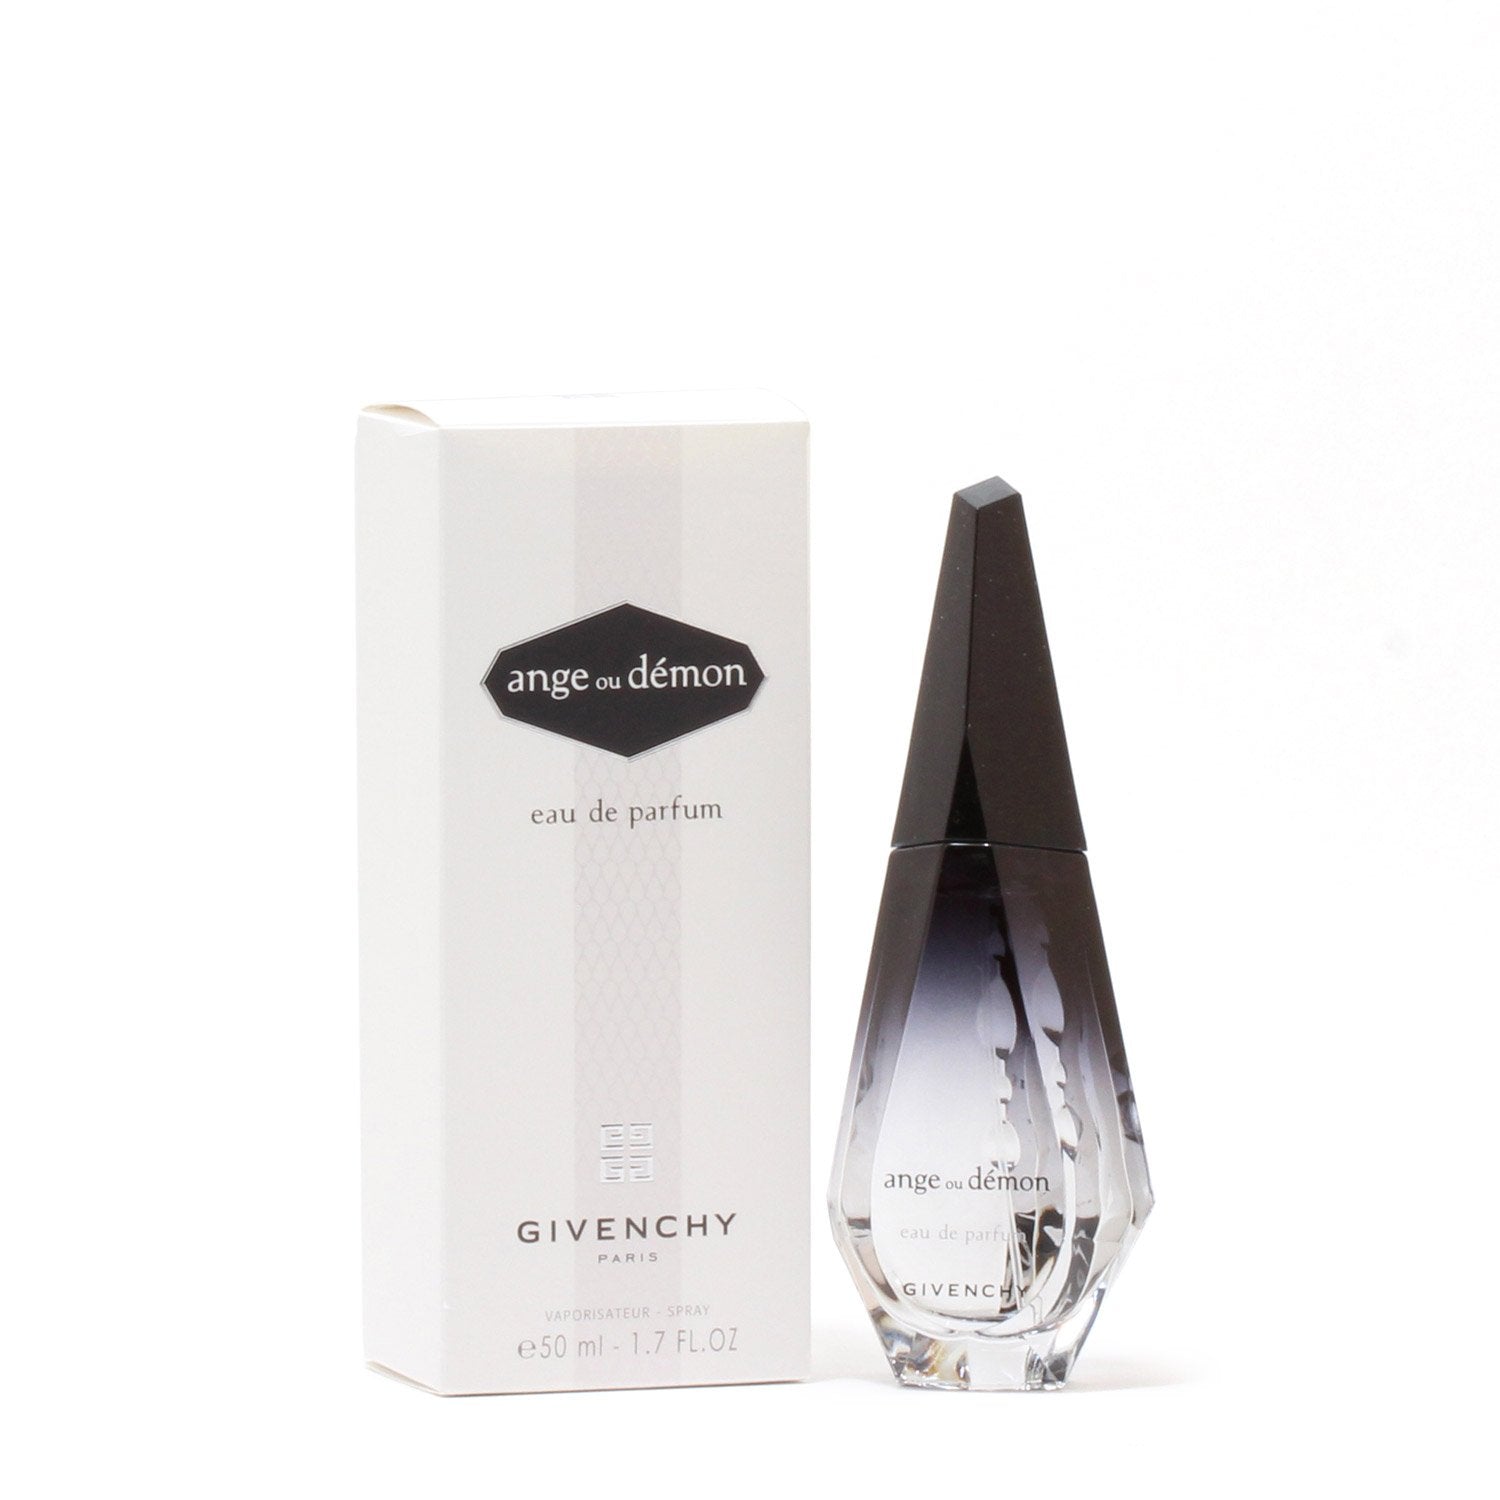 Perfume - ANGE OU DEMON FOR WOMEN BY GIVENCHY - EAU DE PARFUM SPRAY